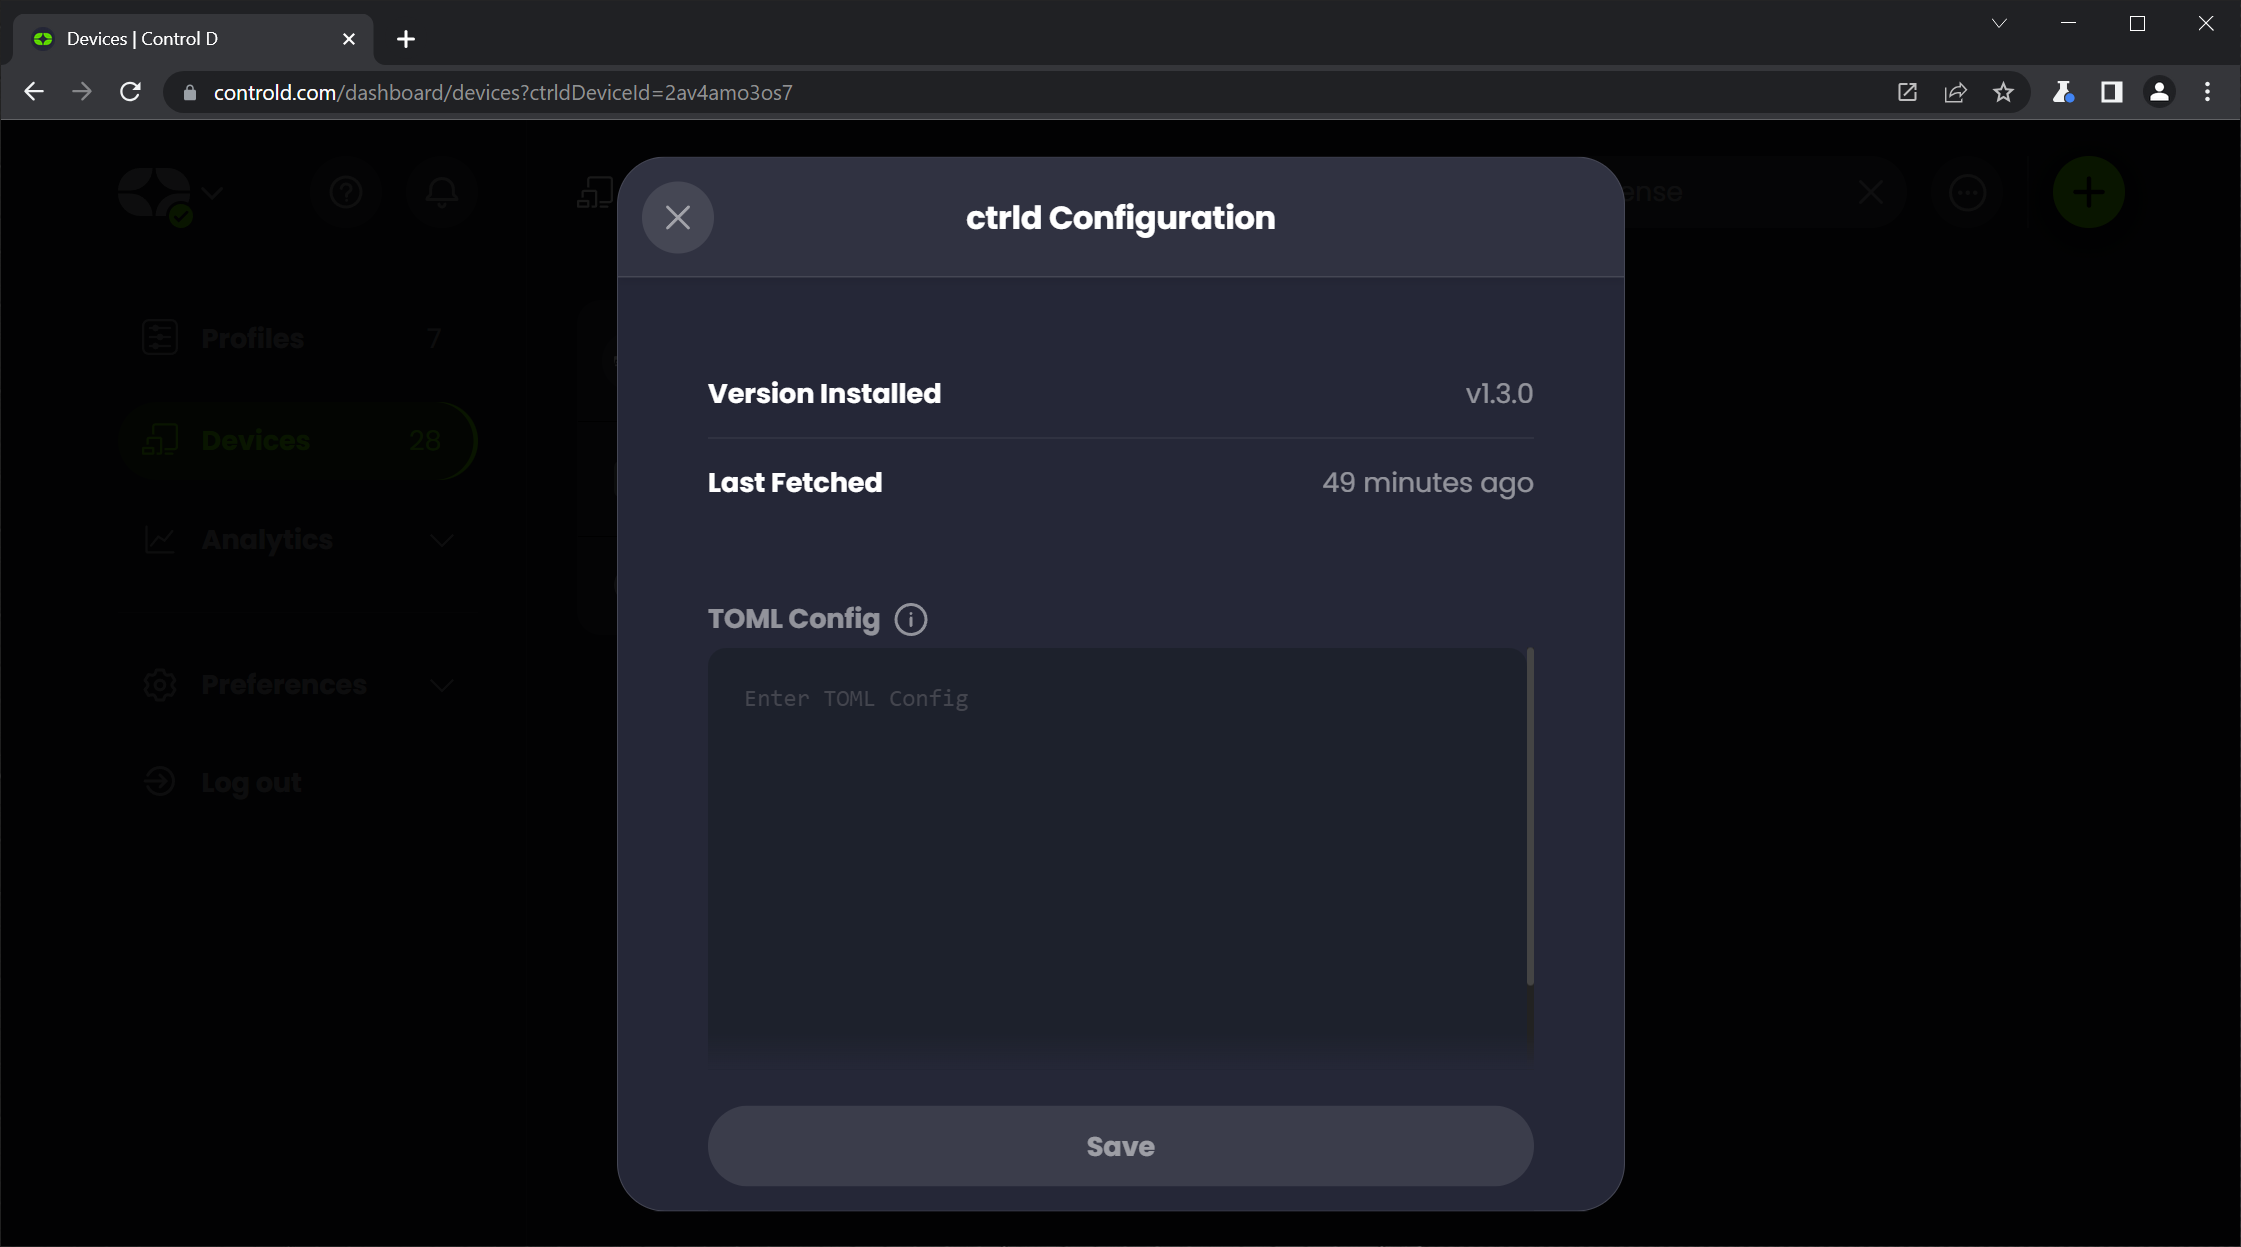 Screenshot of ctrld Configuration screen for editing TOML Config